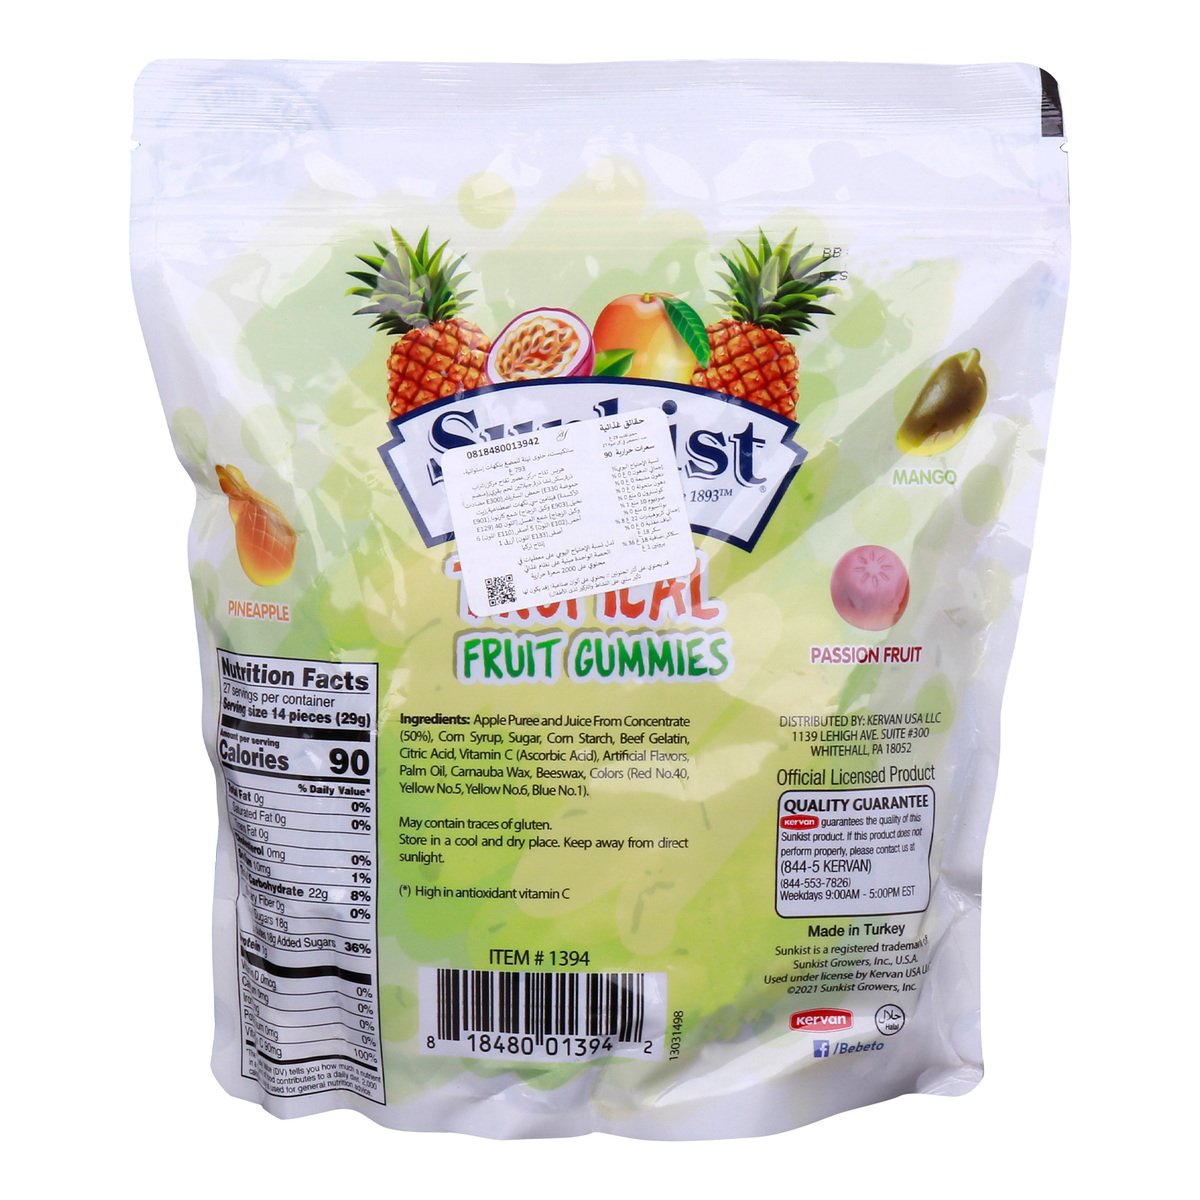 Sunkist Tropical Fruit Gummies 793 g